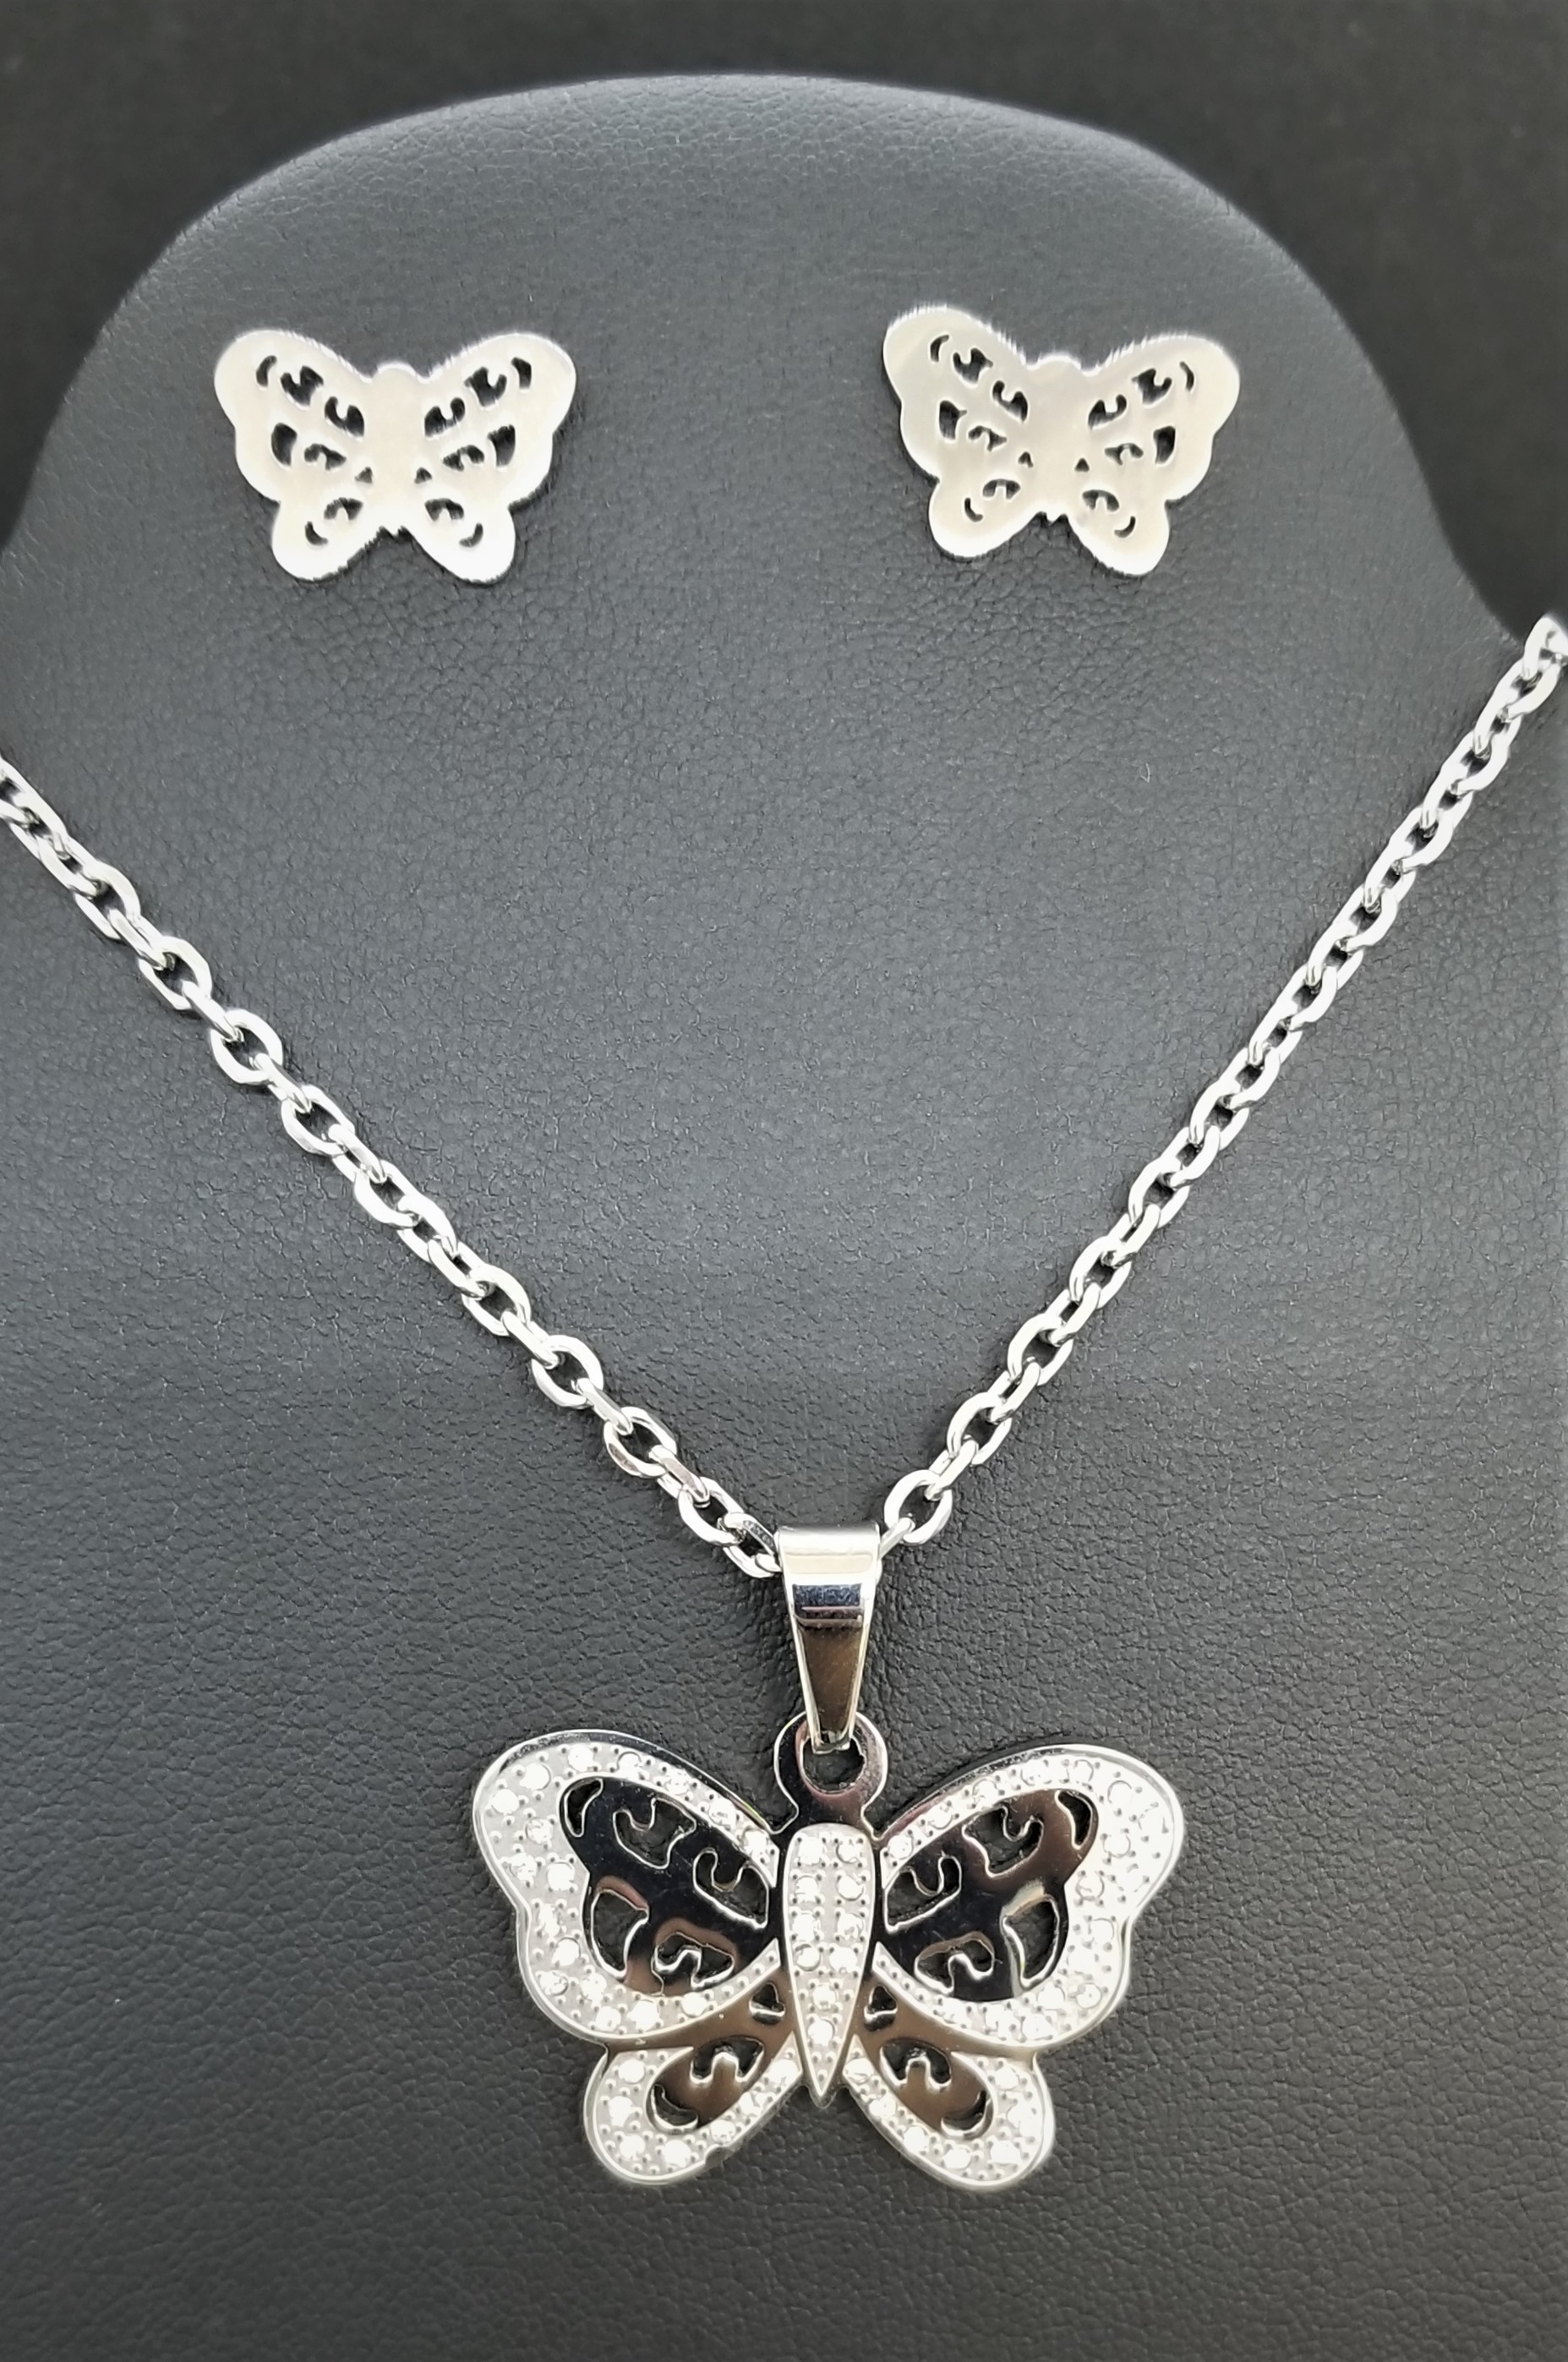 Stainless Steel Butterfly CZ Necklace & Earrings Set 